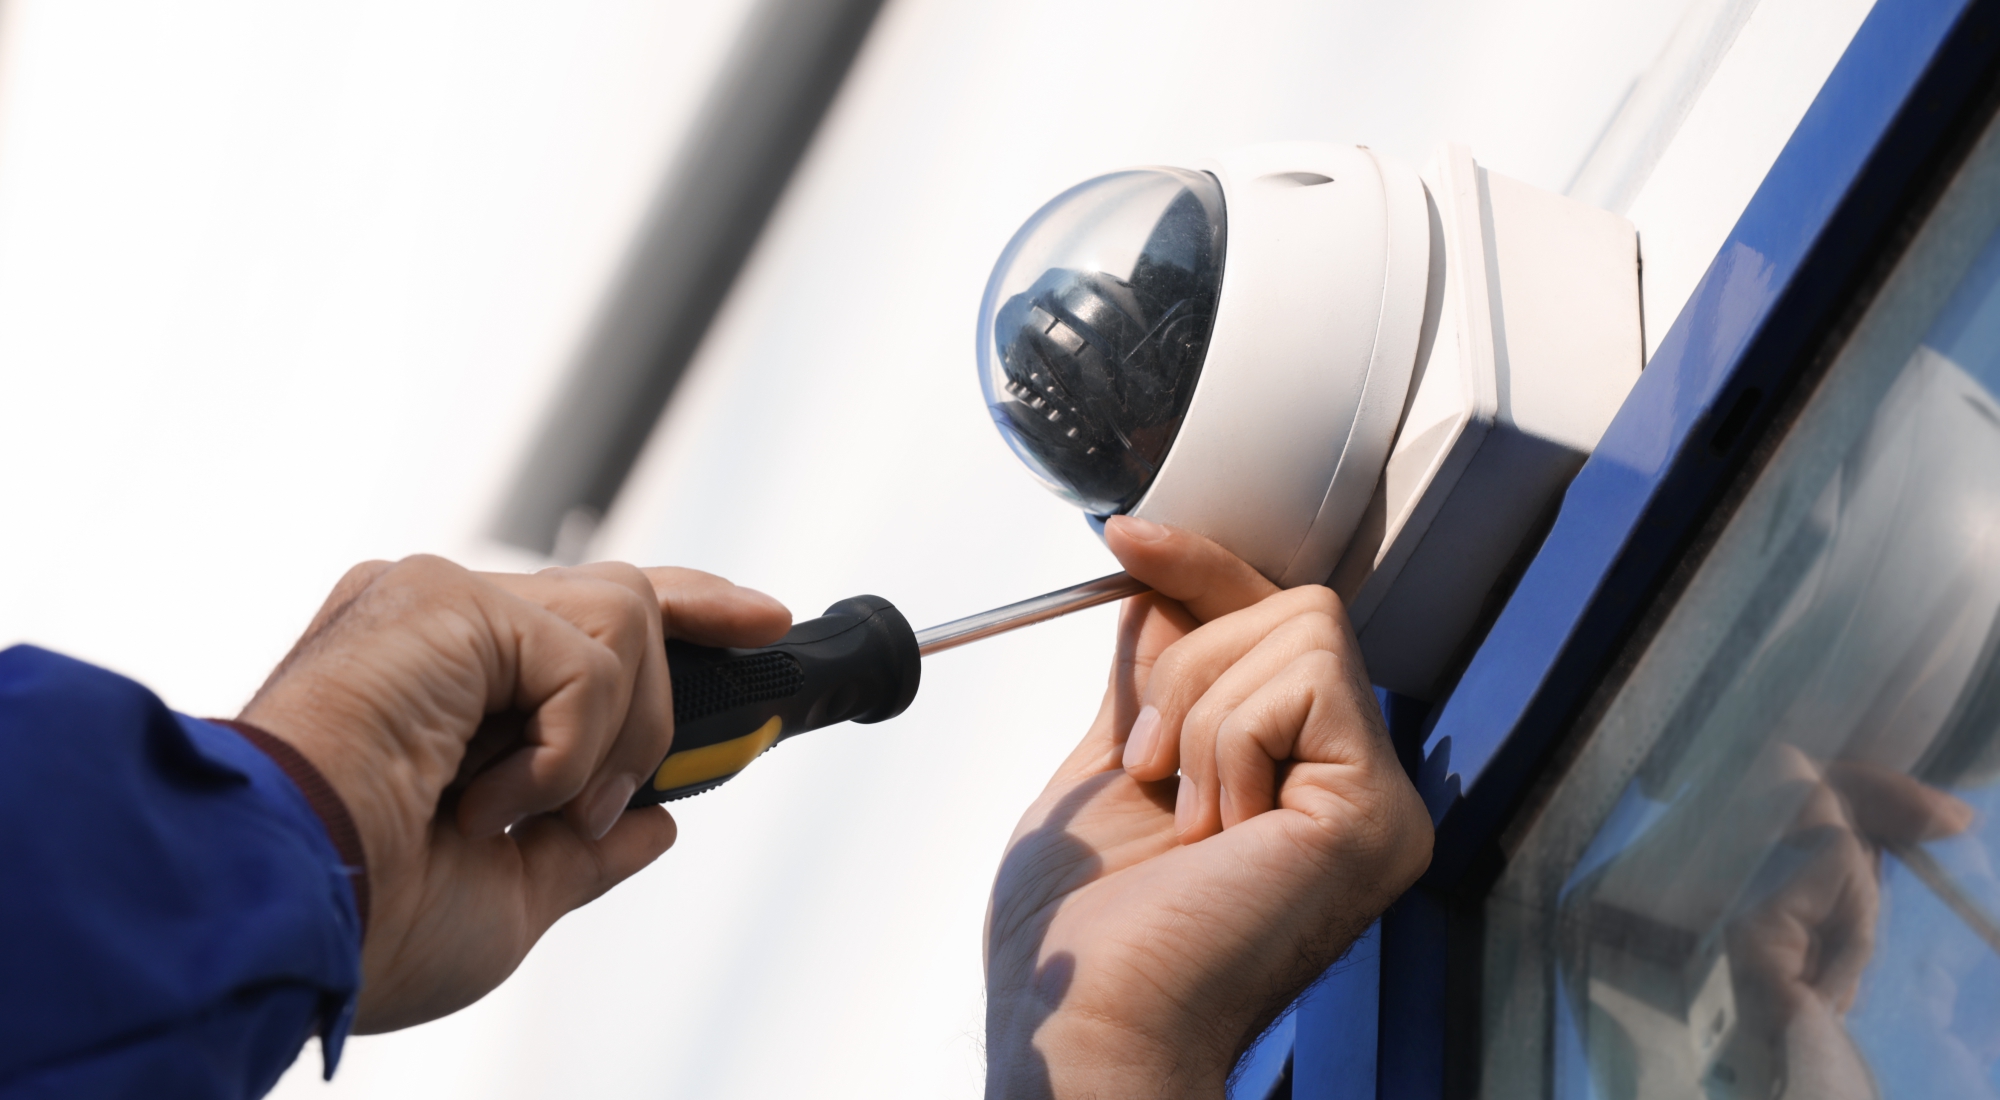 Common Mistakes To Avoid When Installing CCTV